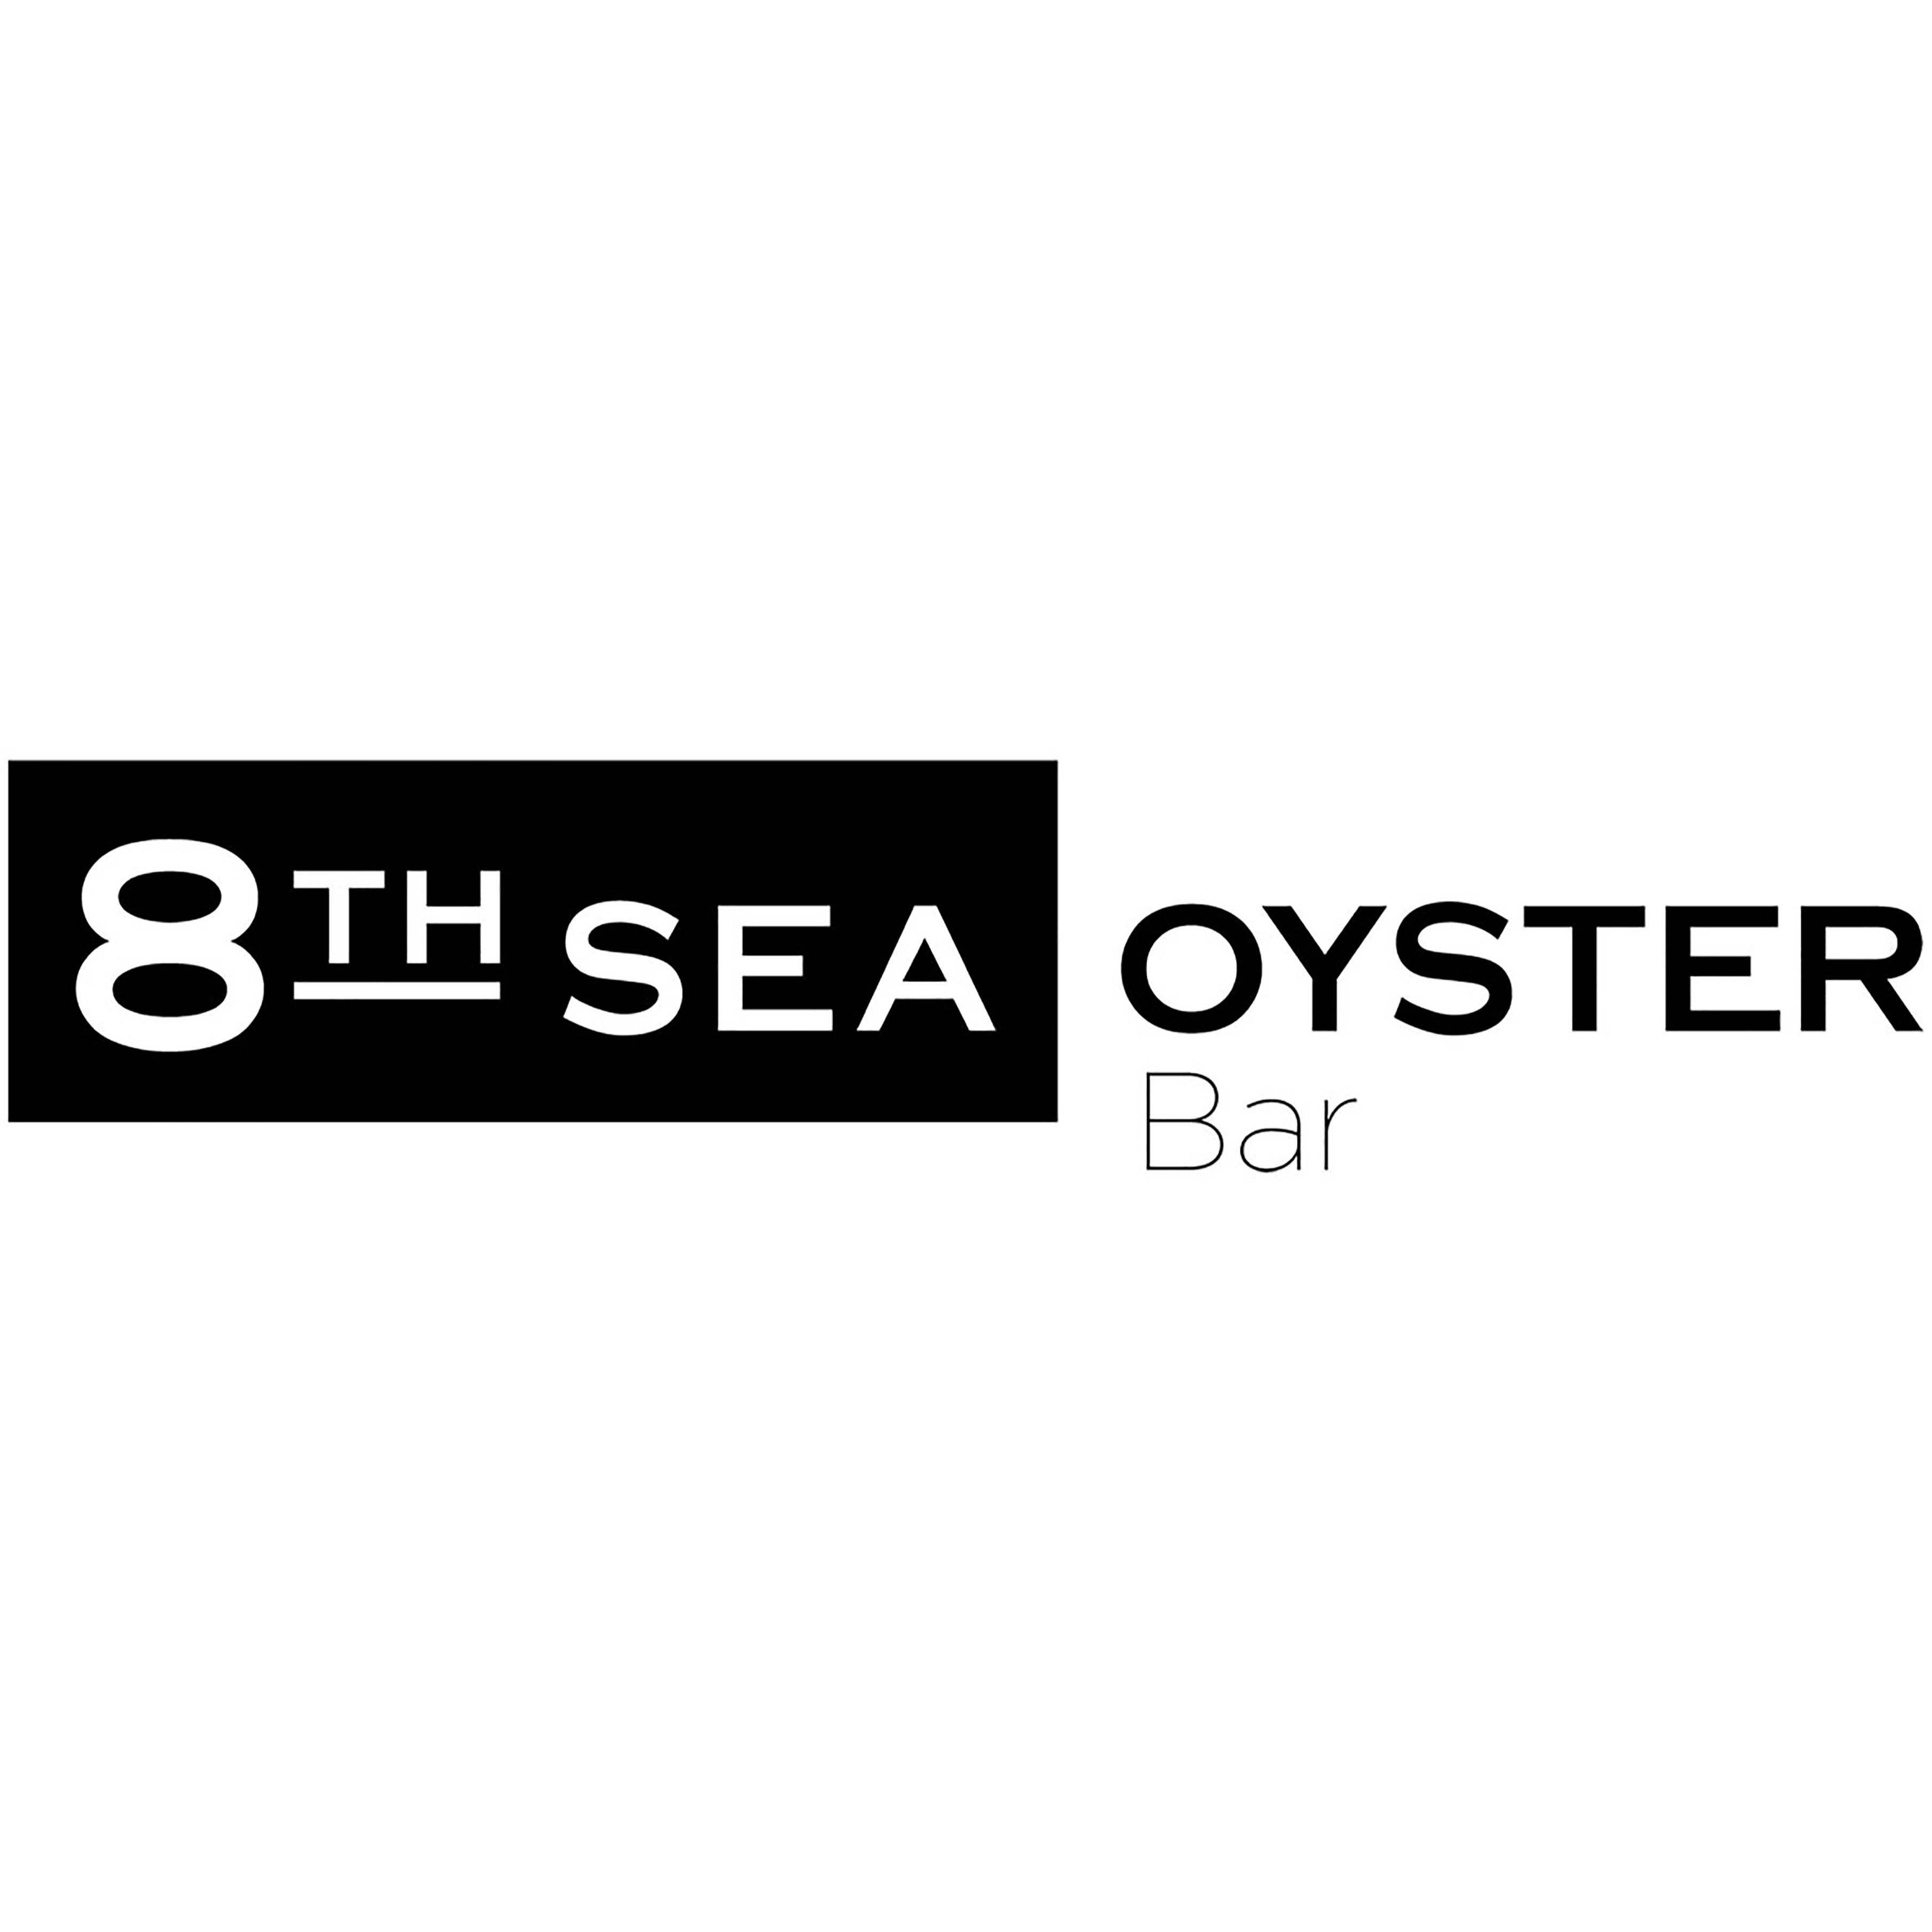 8TH SEA OYSTER Barパルコヤ上野店 Logo